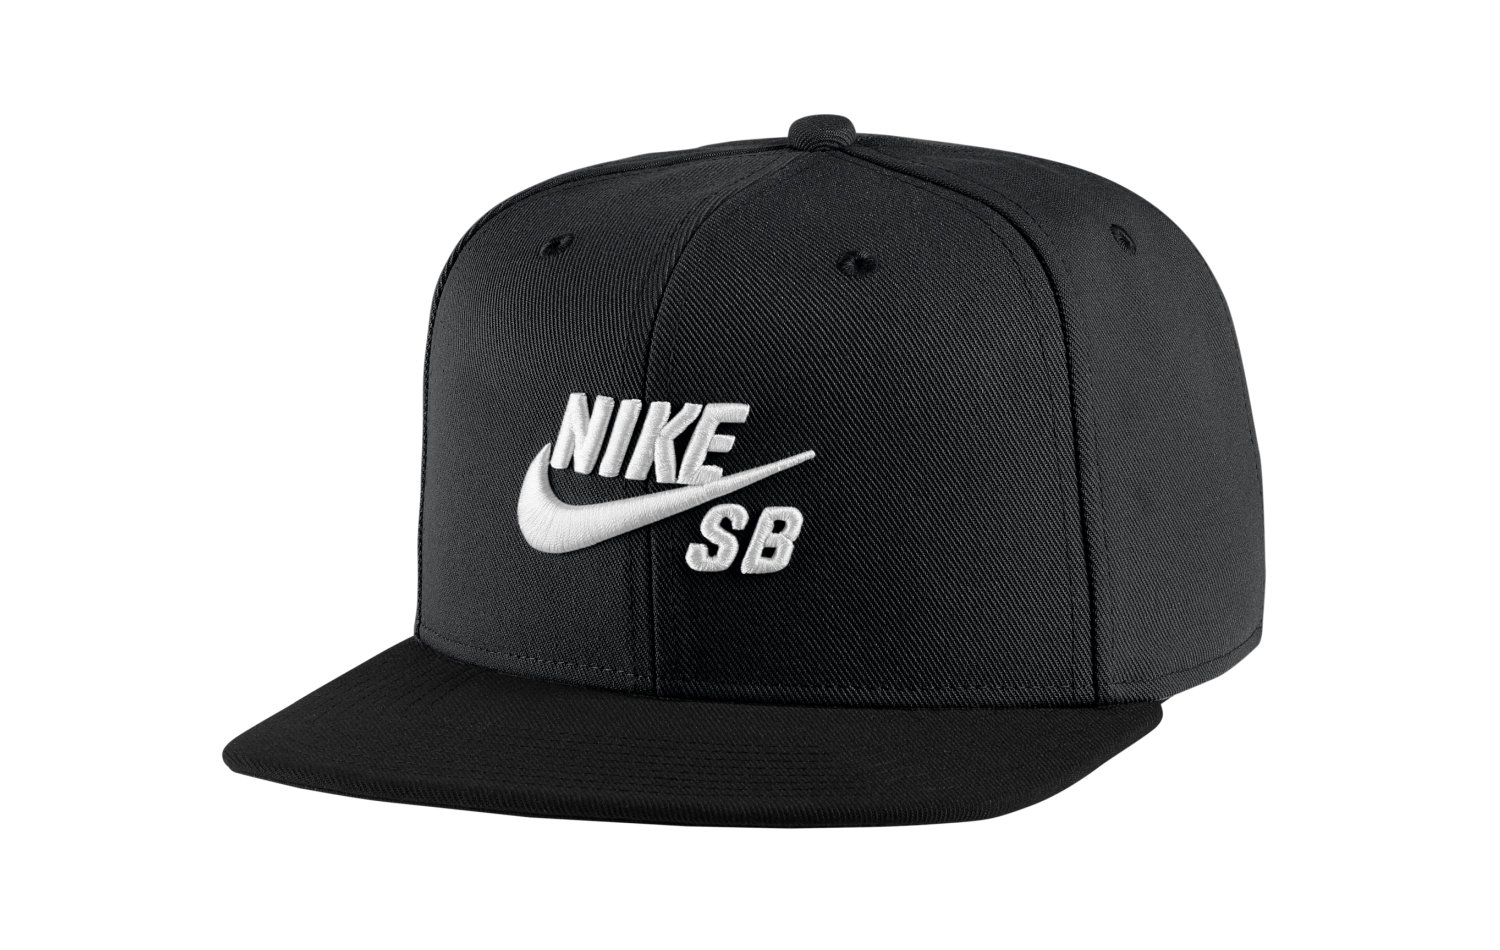 Nike Sb Fullcap Hot Sale, SAVE 38 